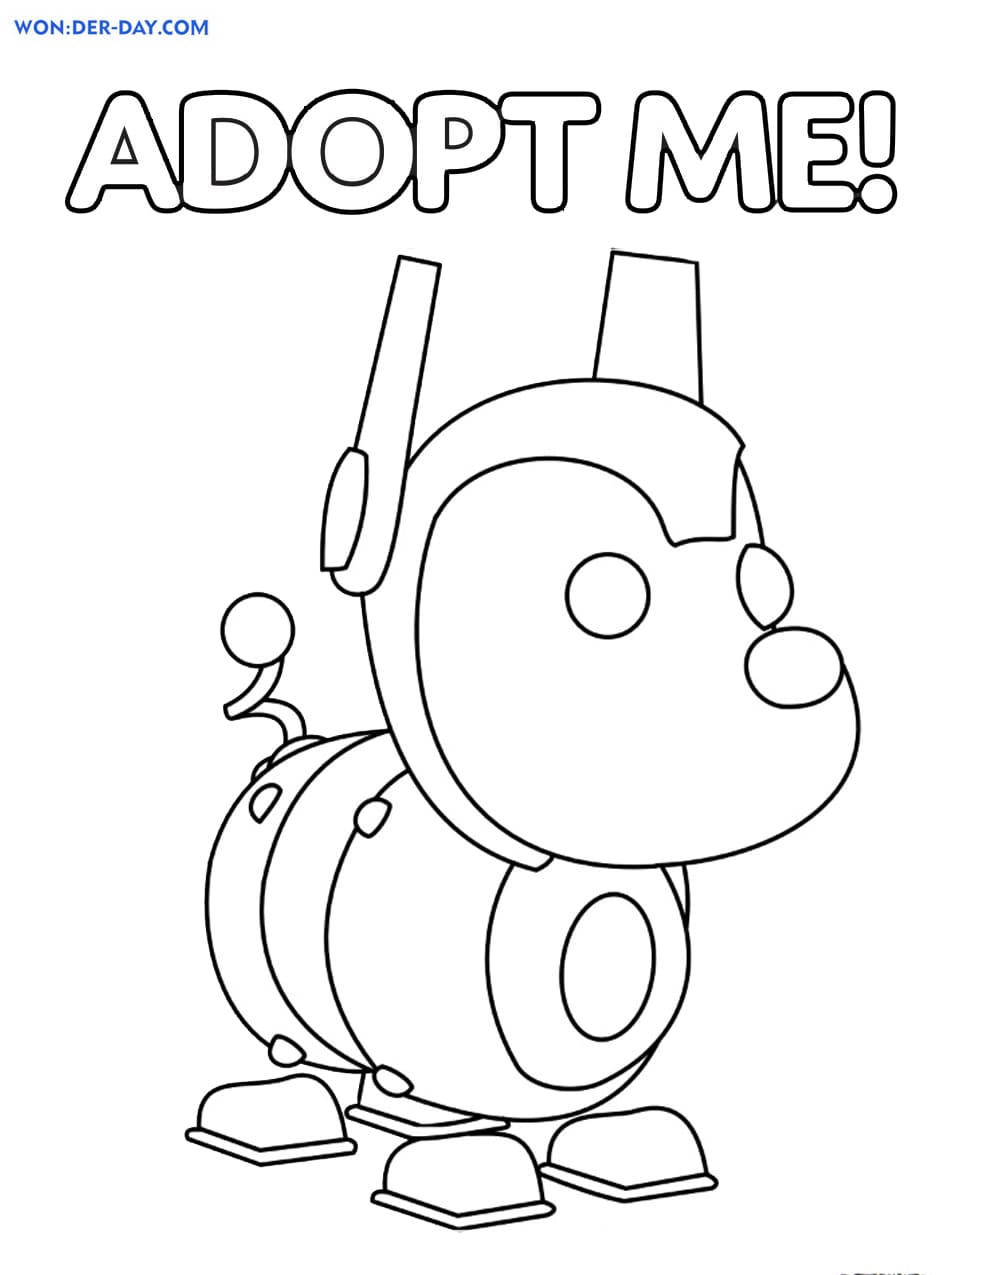 Dibujos Para Colorear Adopt Me Imprime Gratis Wonder Day Com - roblox adopt me personajes dibujos roblox para colorear